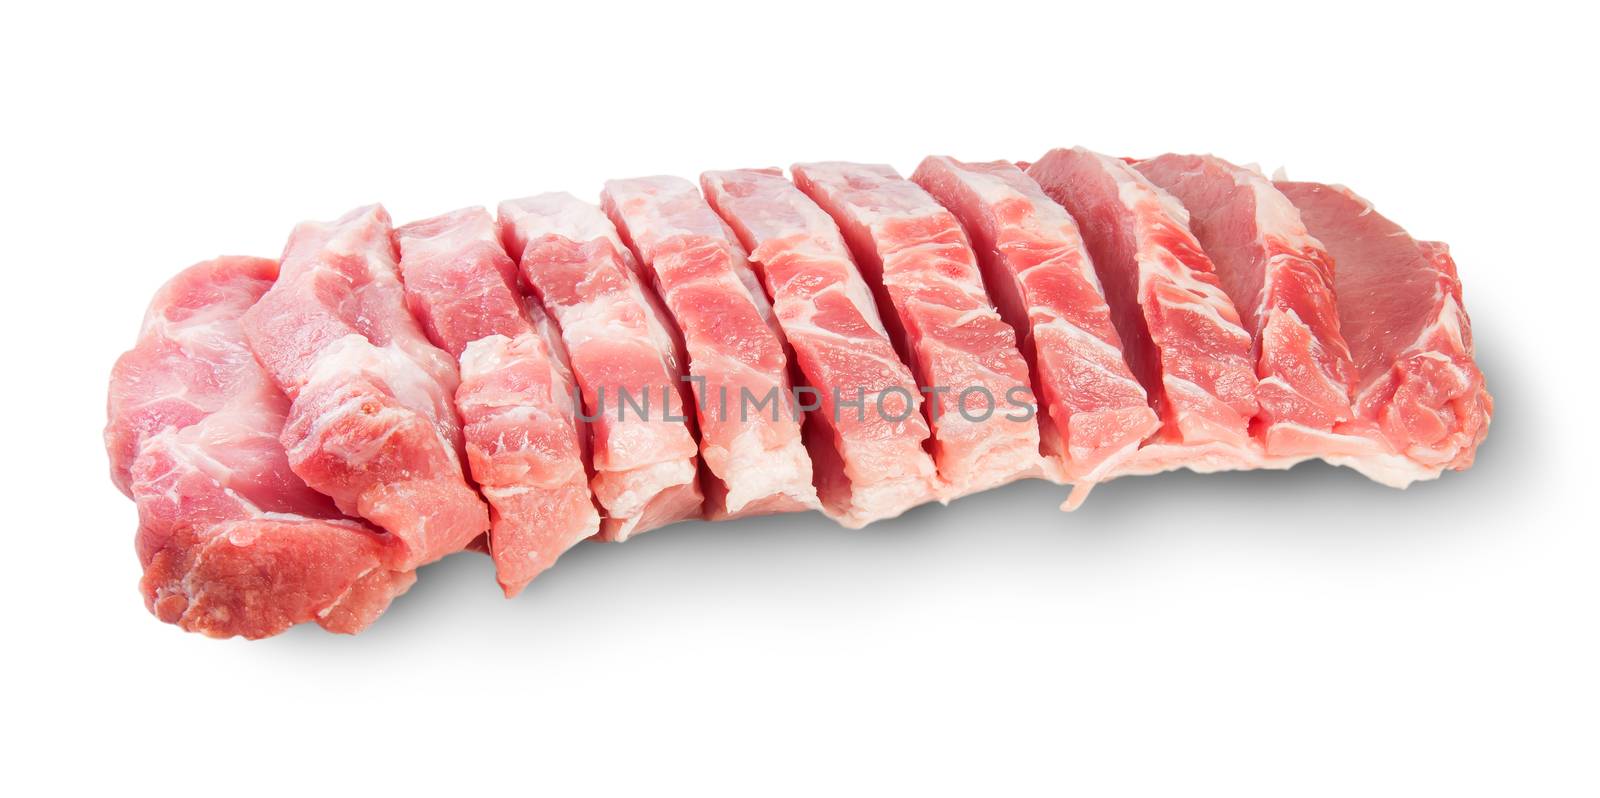 Raw Sliced Pork Meat by Cipariss